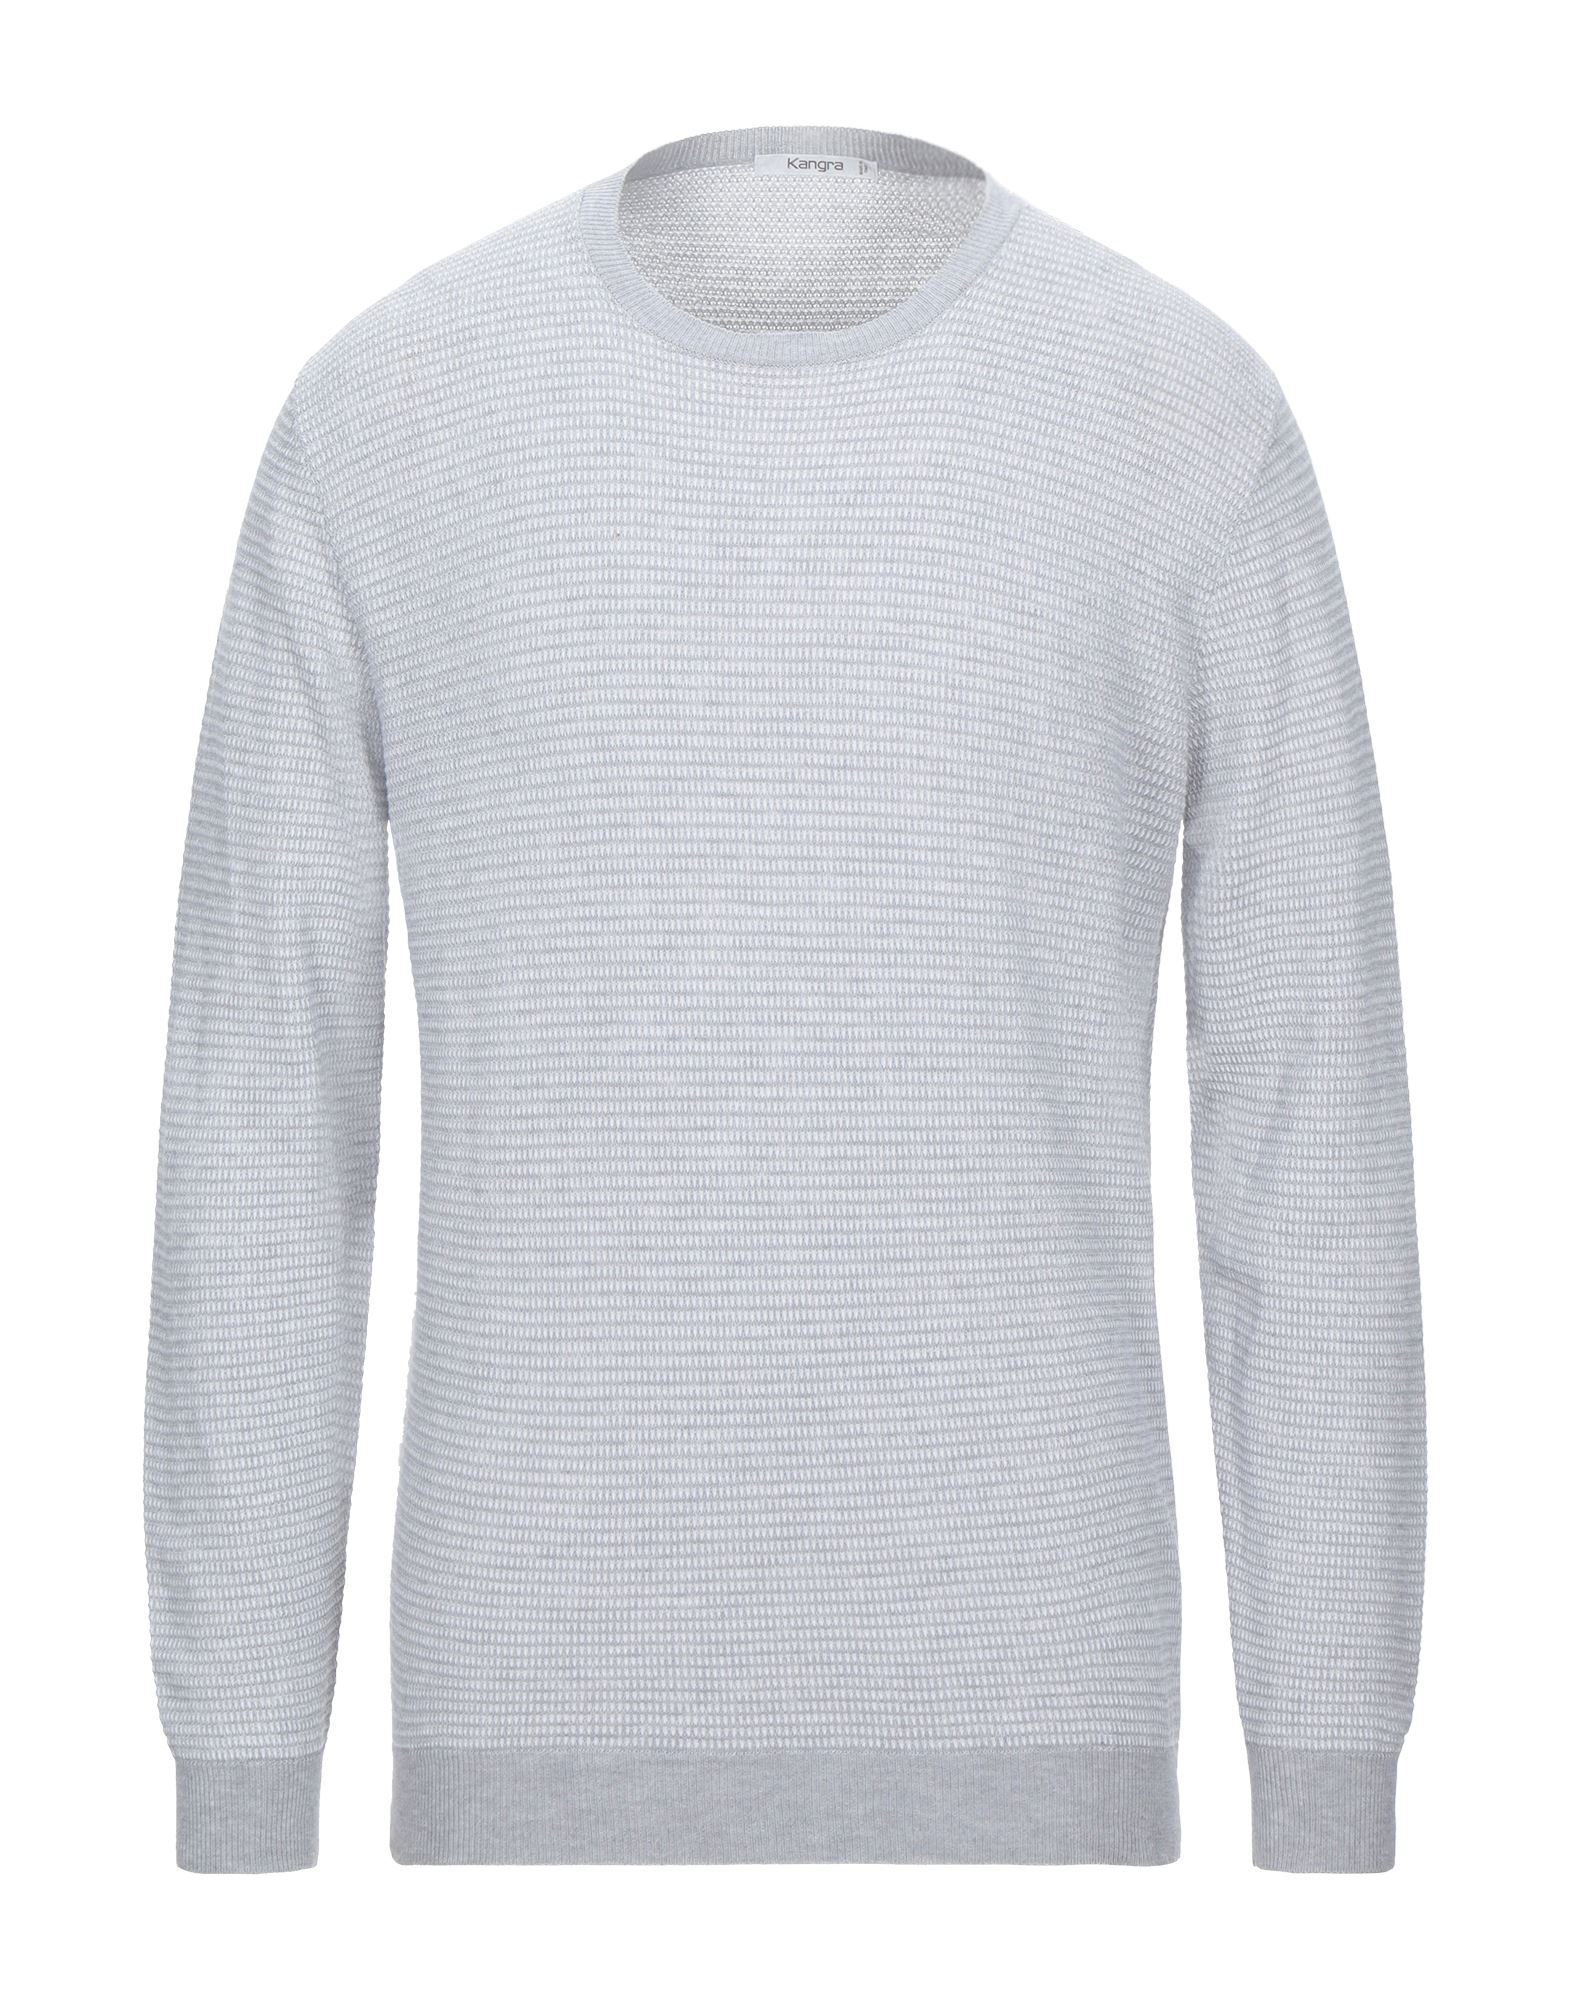 KANGRA CASHMERE Sweaters - Item 14103540